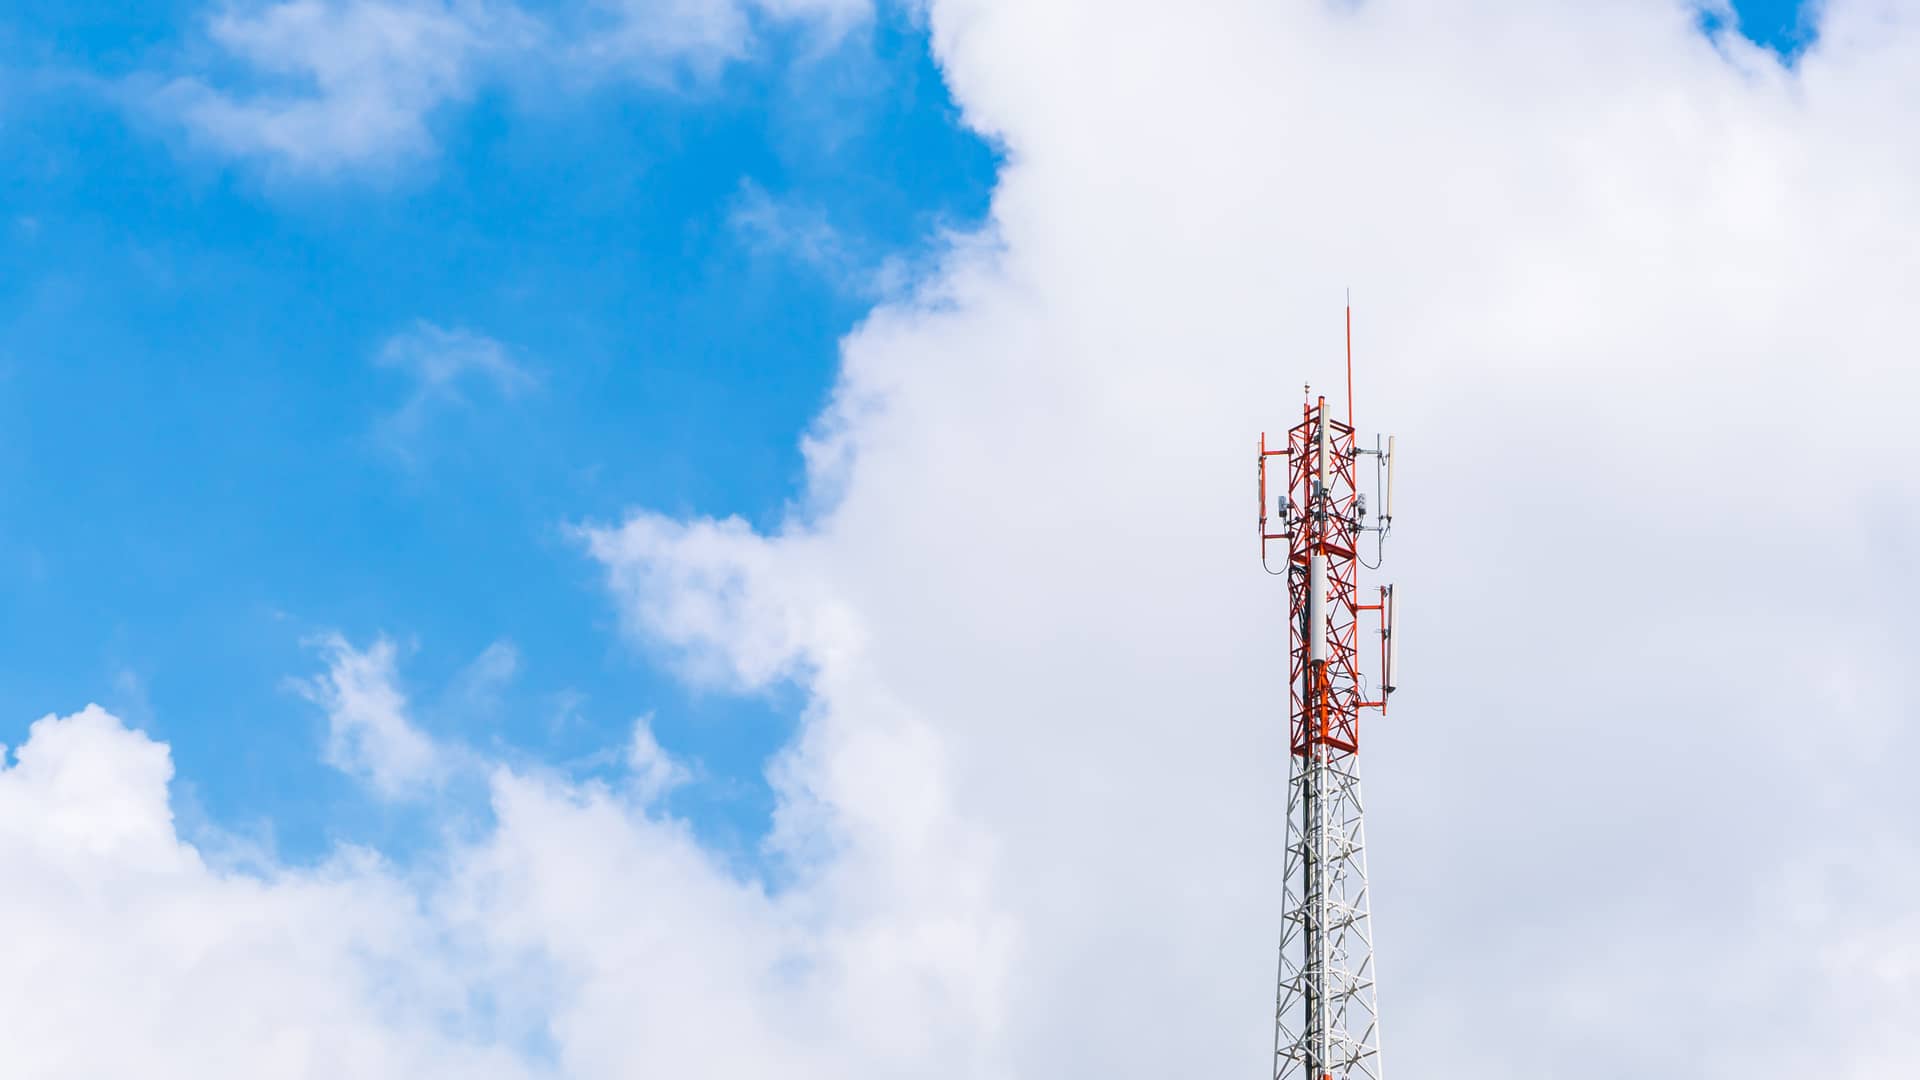 Antena de telecomunicaciones para hablar de la cobertura del operador Excom